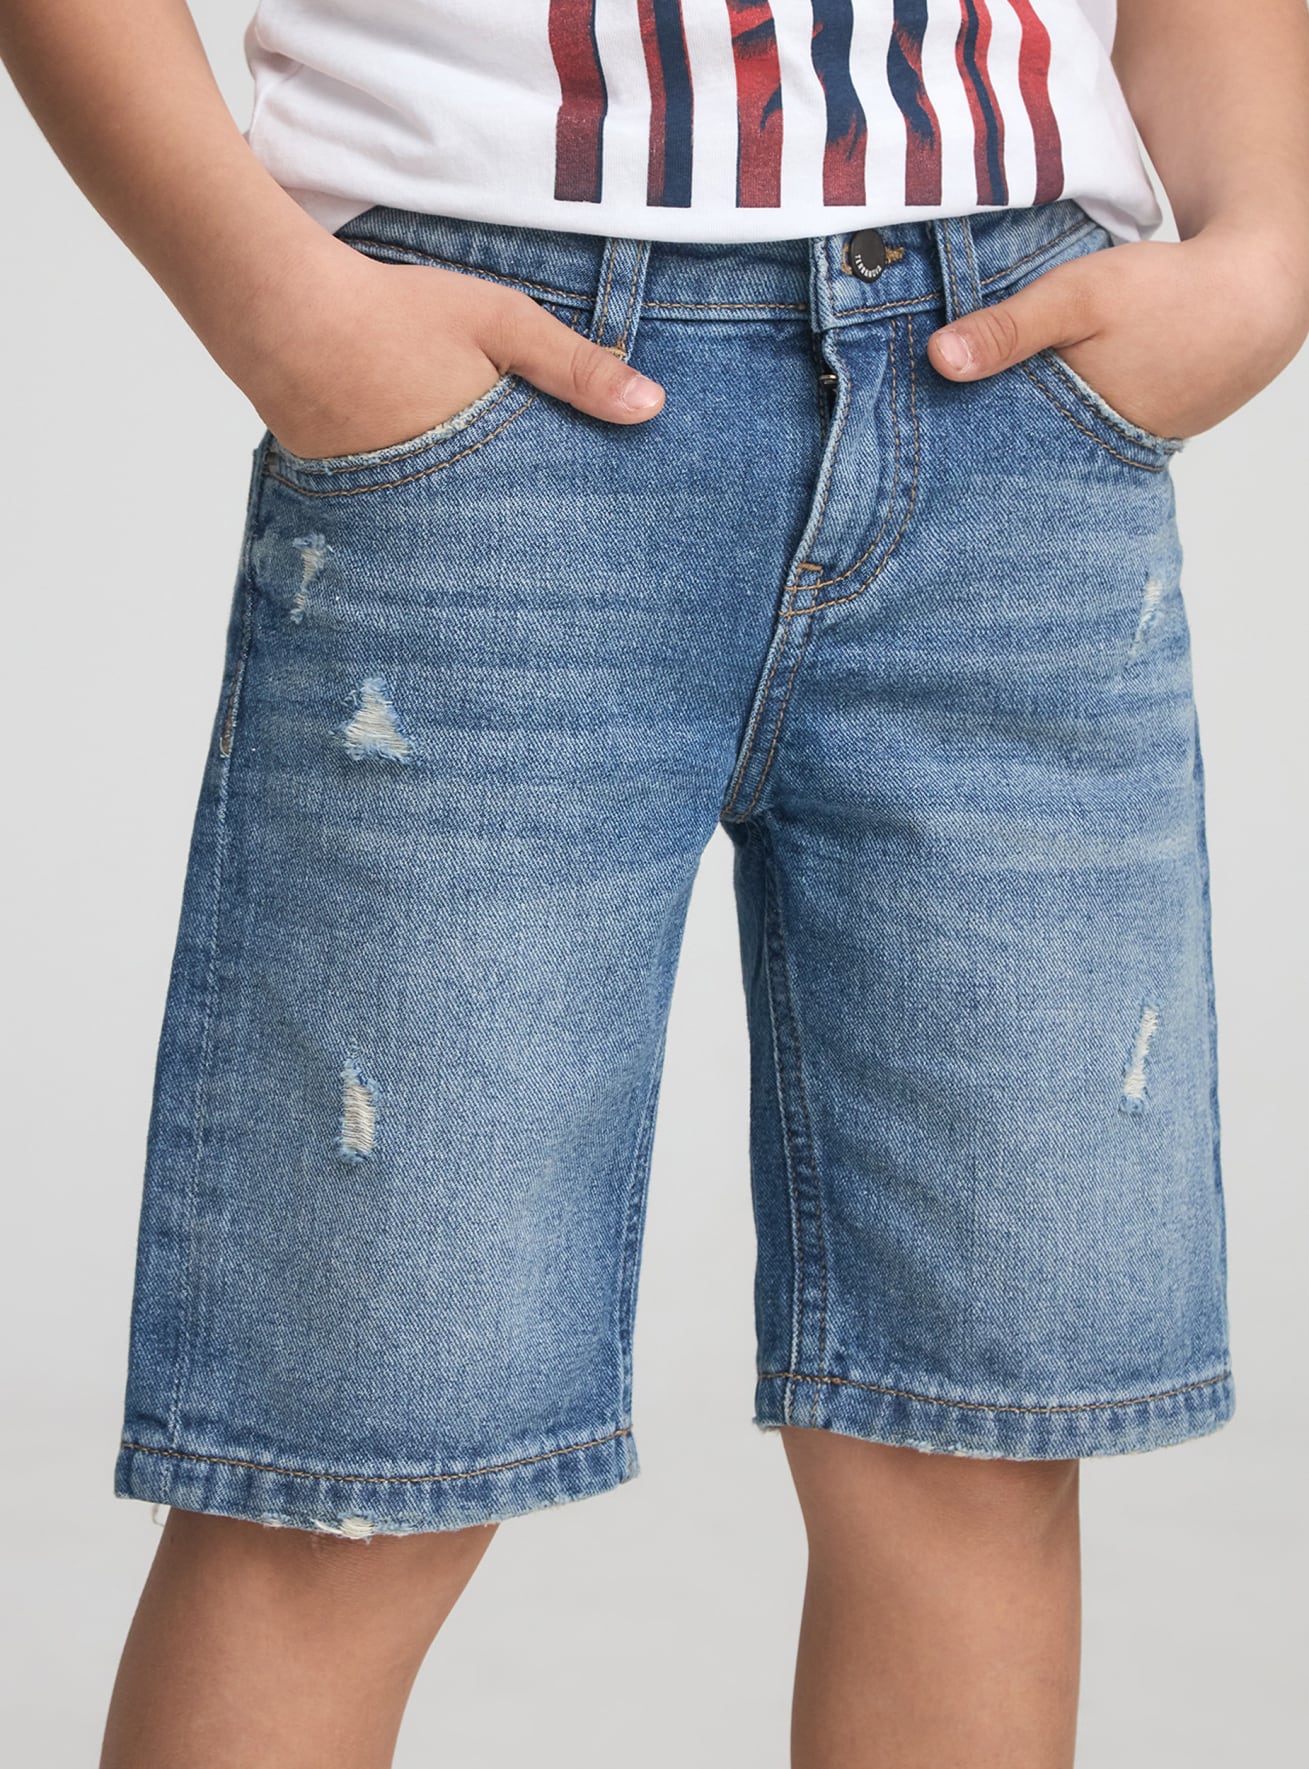 Pantalone Jeans Corto Detské chlapecké Terranova